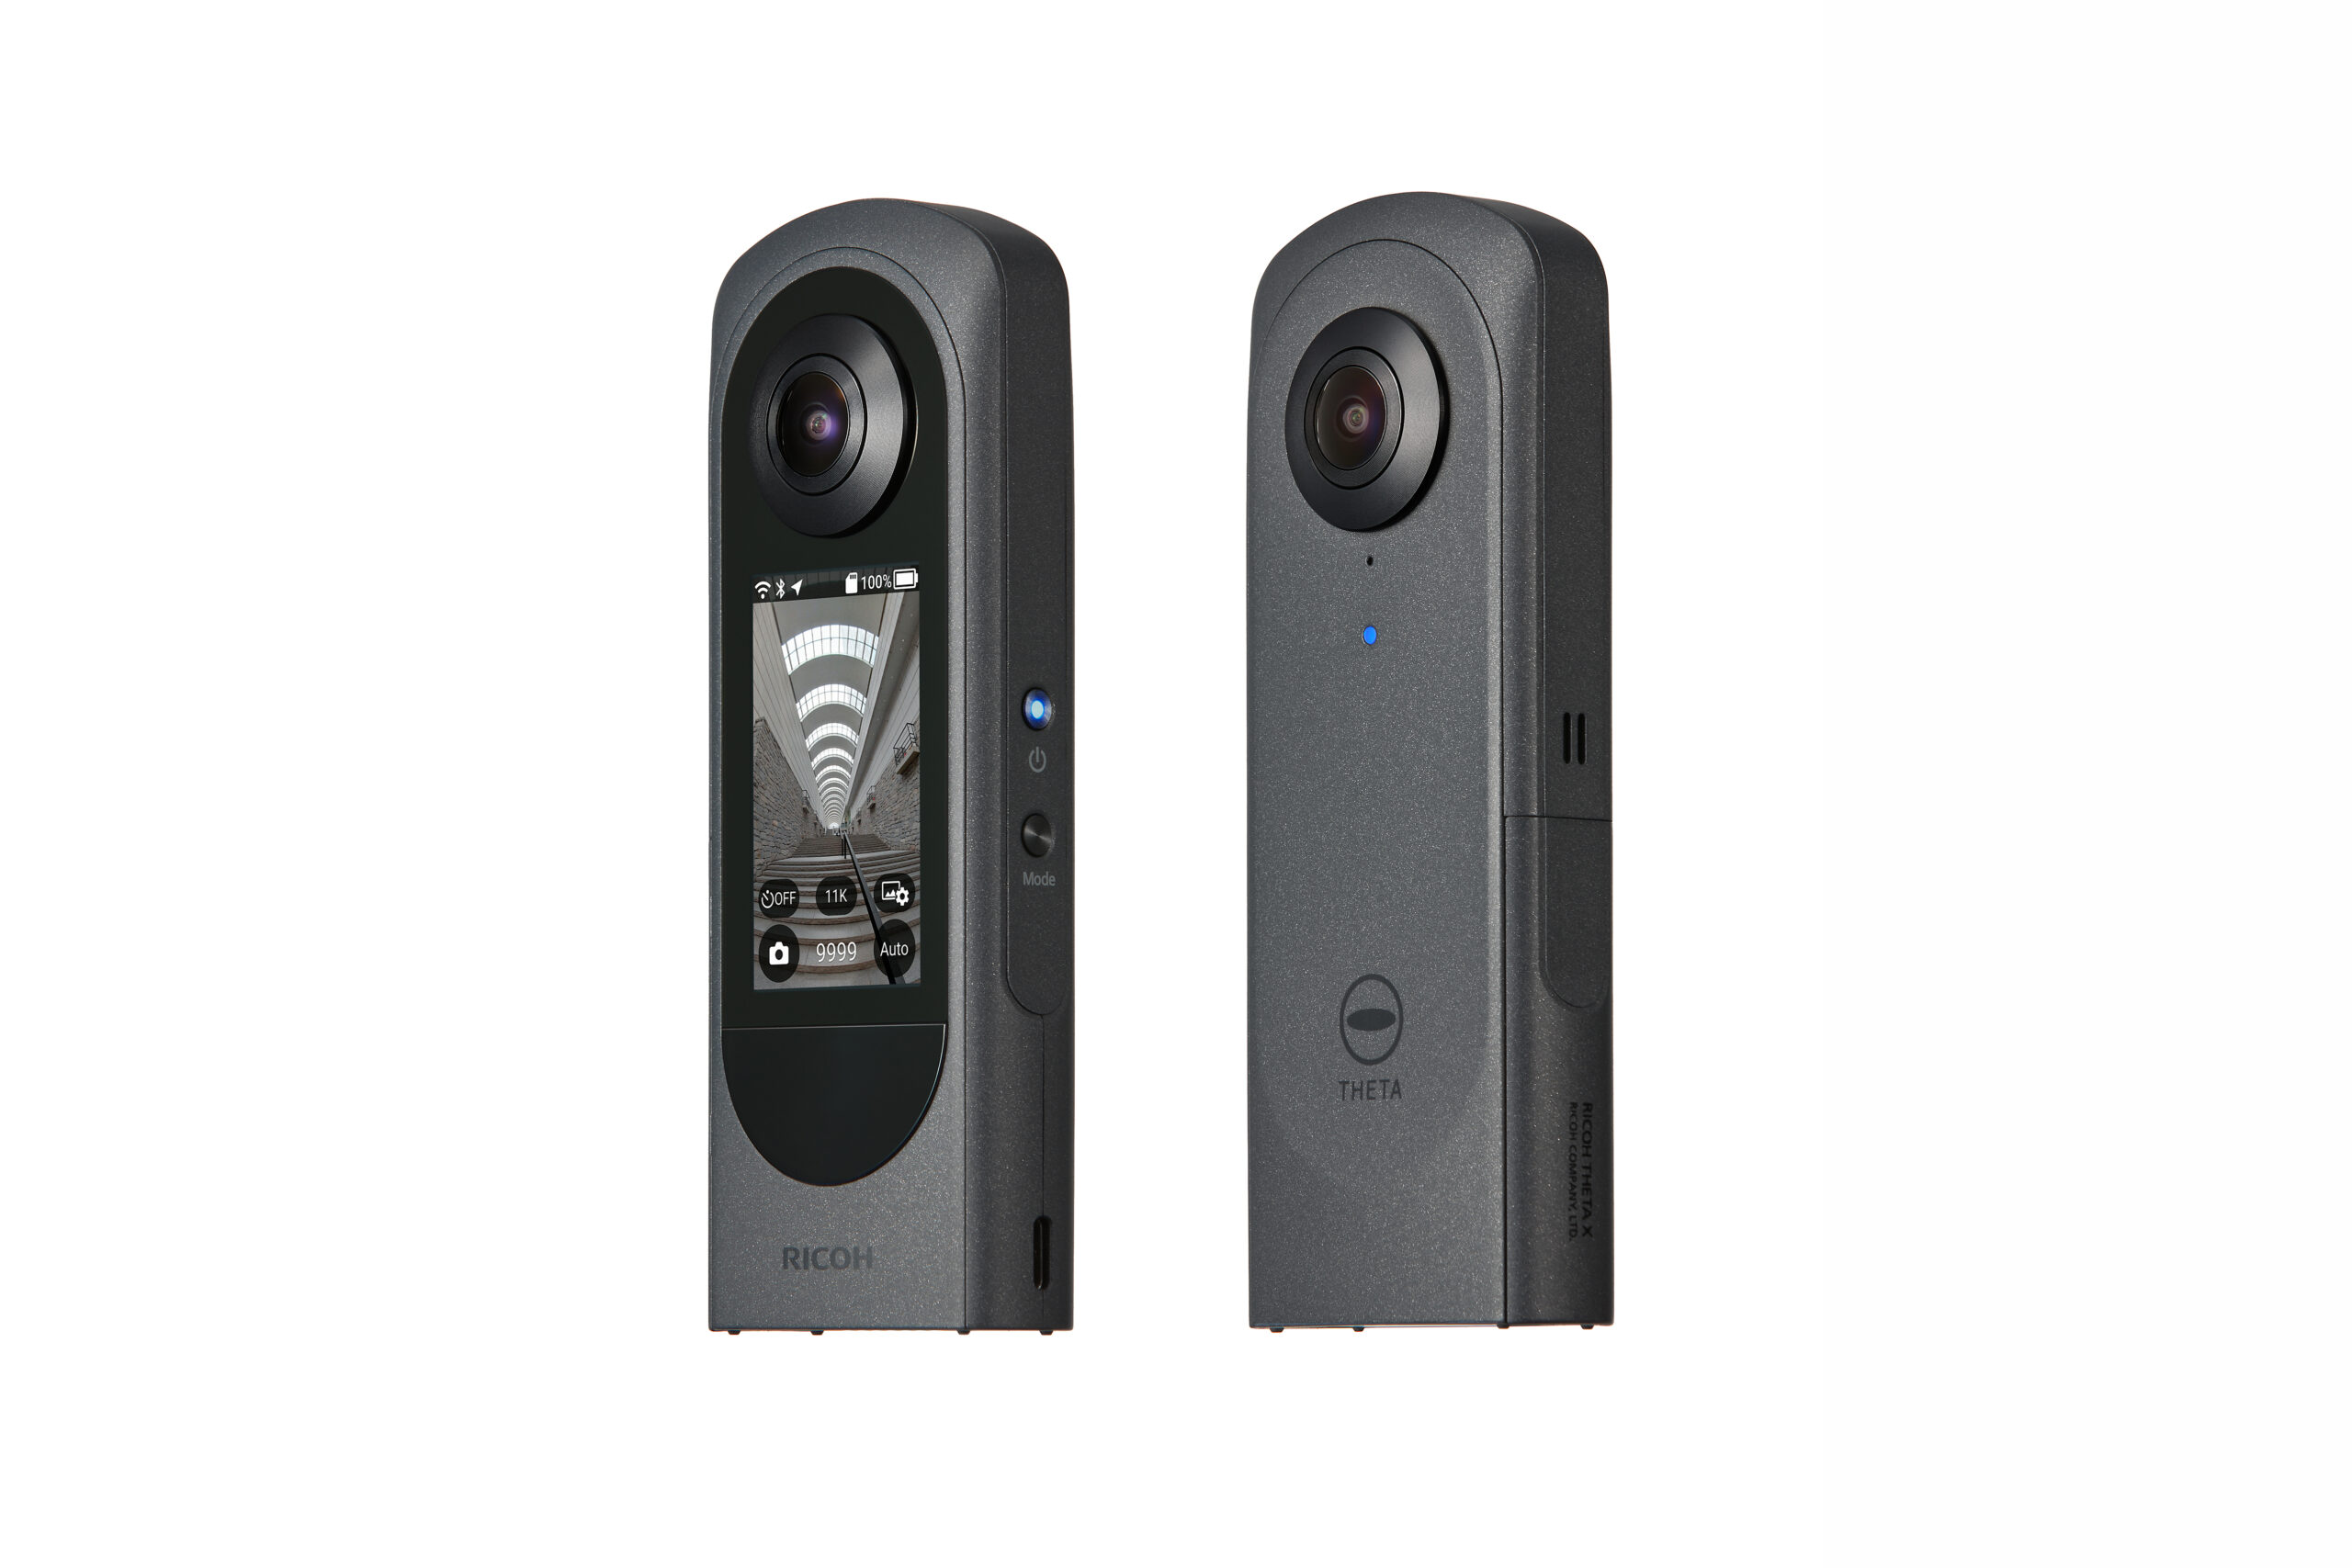 RICOH เปิดตัวกล้อง 360 องศา รุ่นใหม่ล่าสุด ‘THETA X’